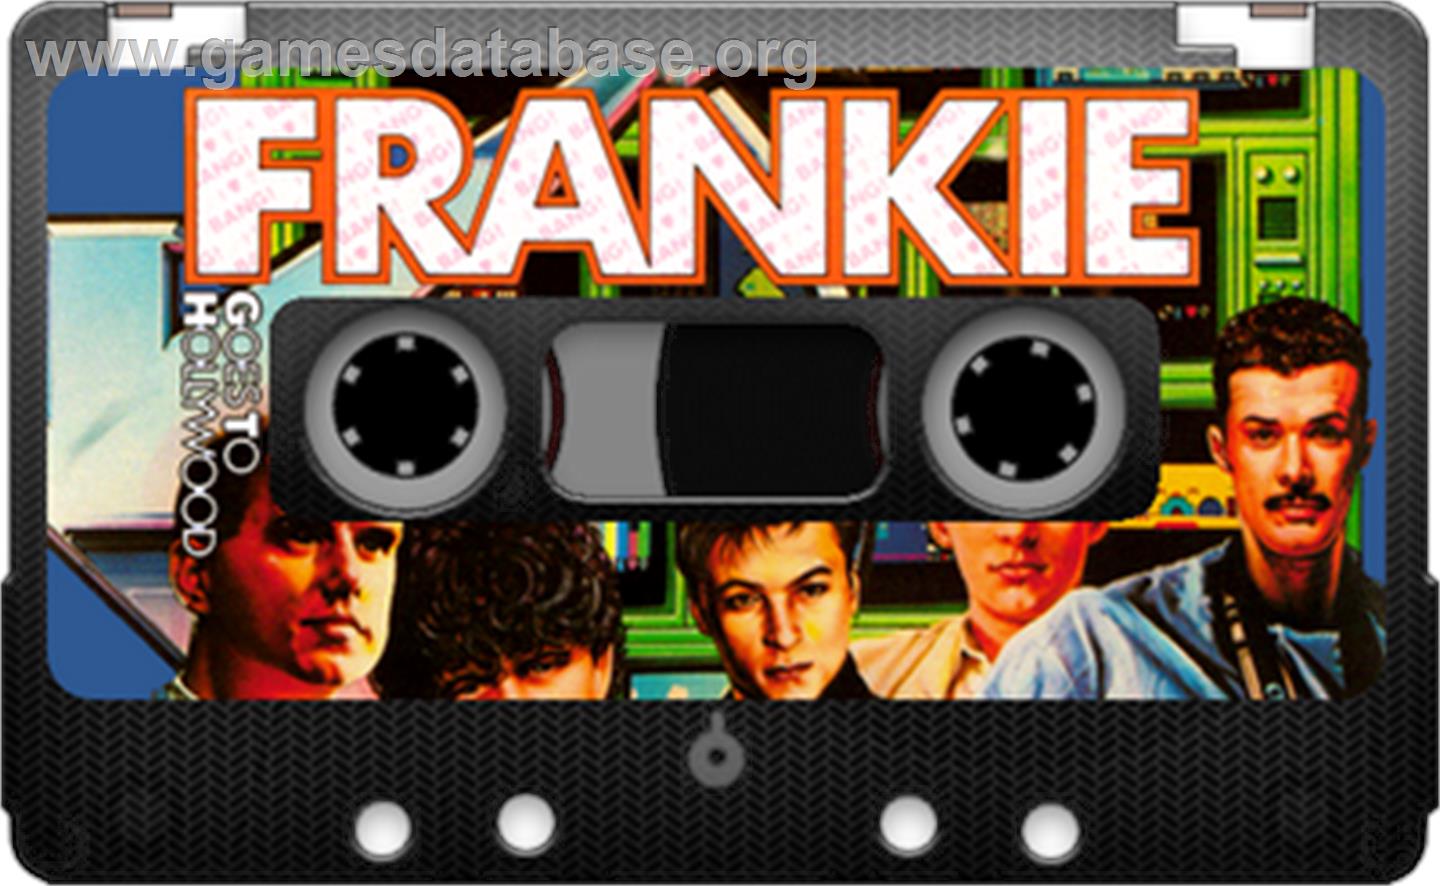 Frankie Goes to Hollywood - Sinclair ZX Spectrum - Artwork - Cartridge